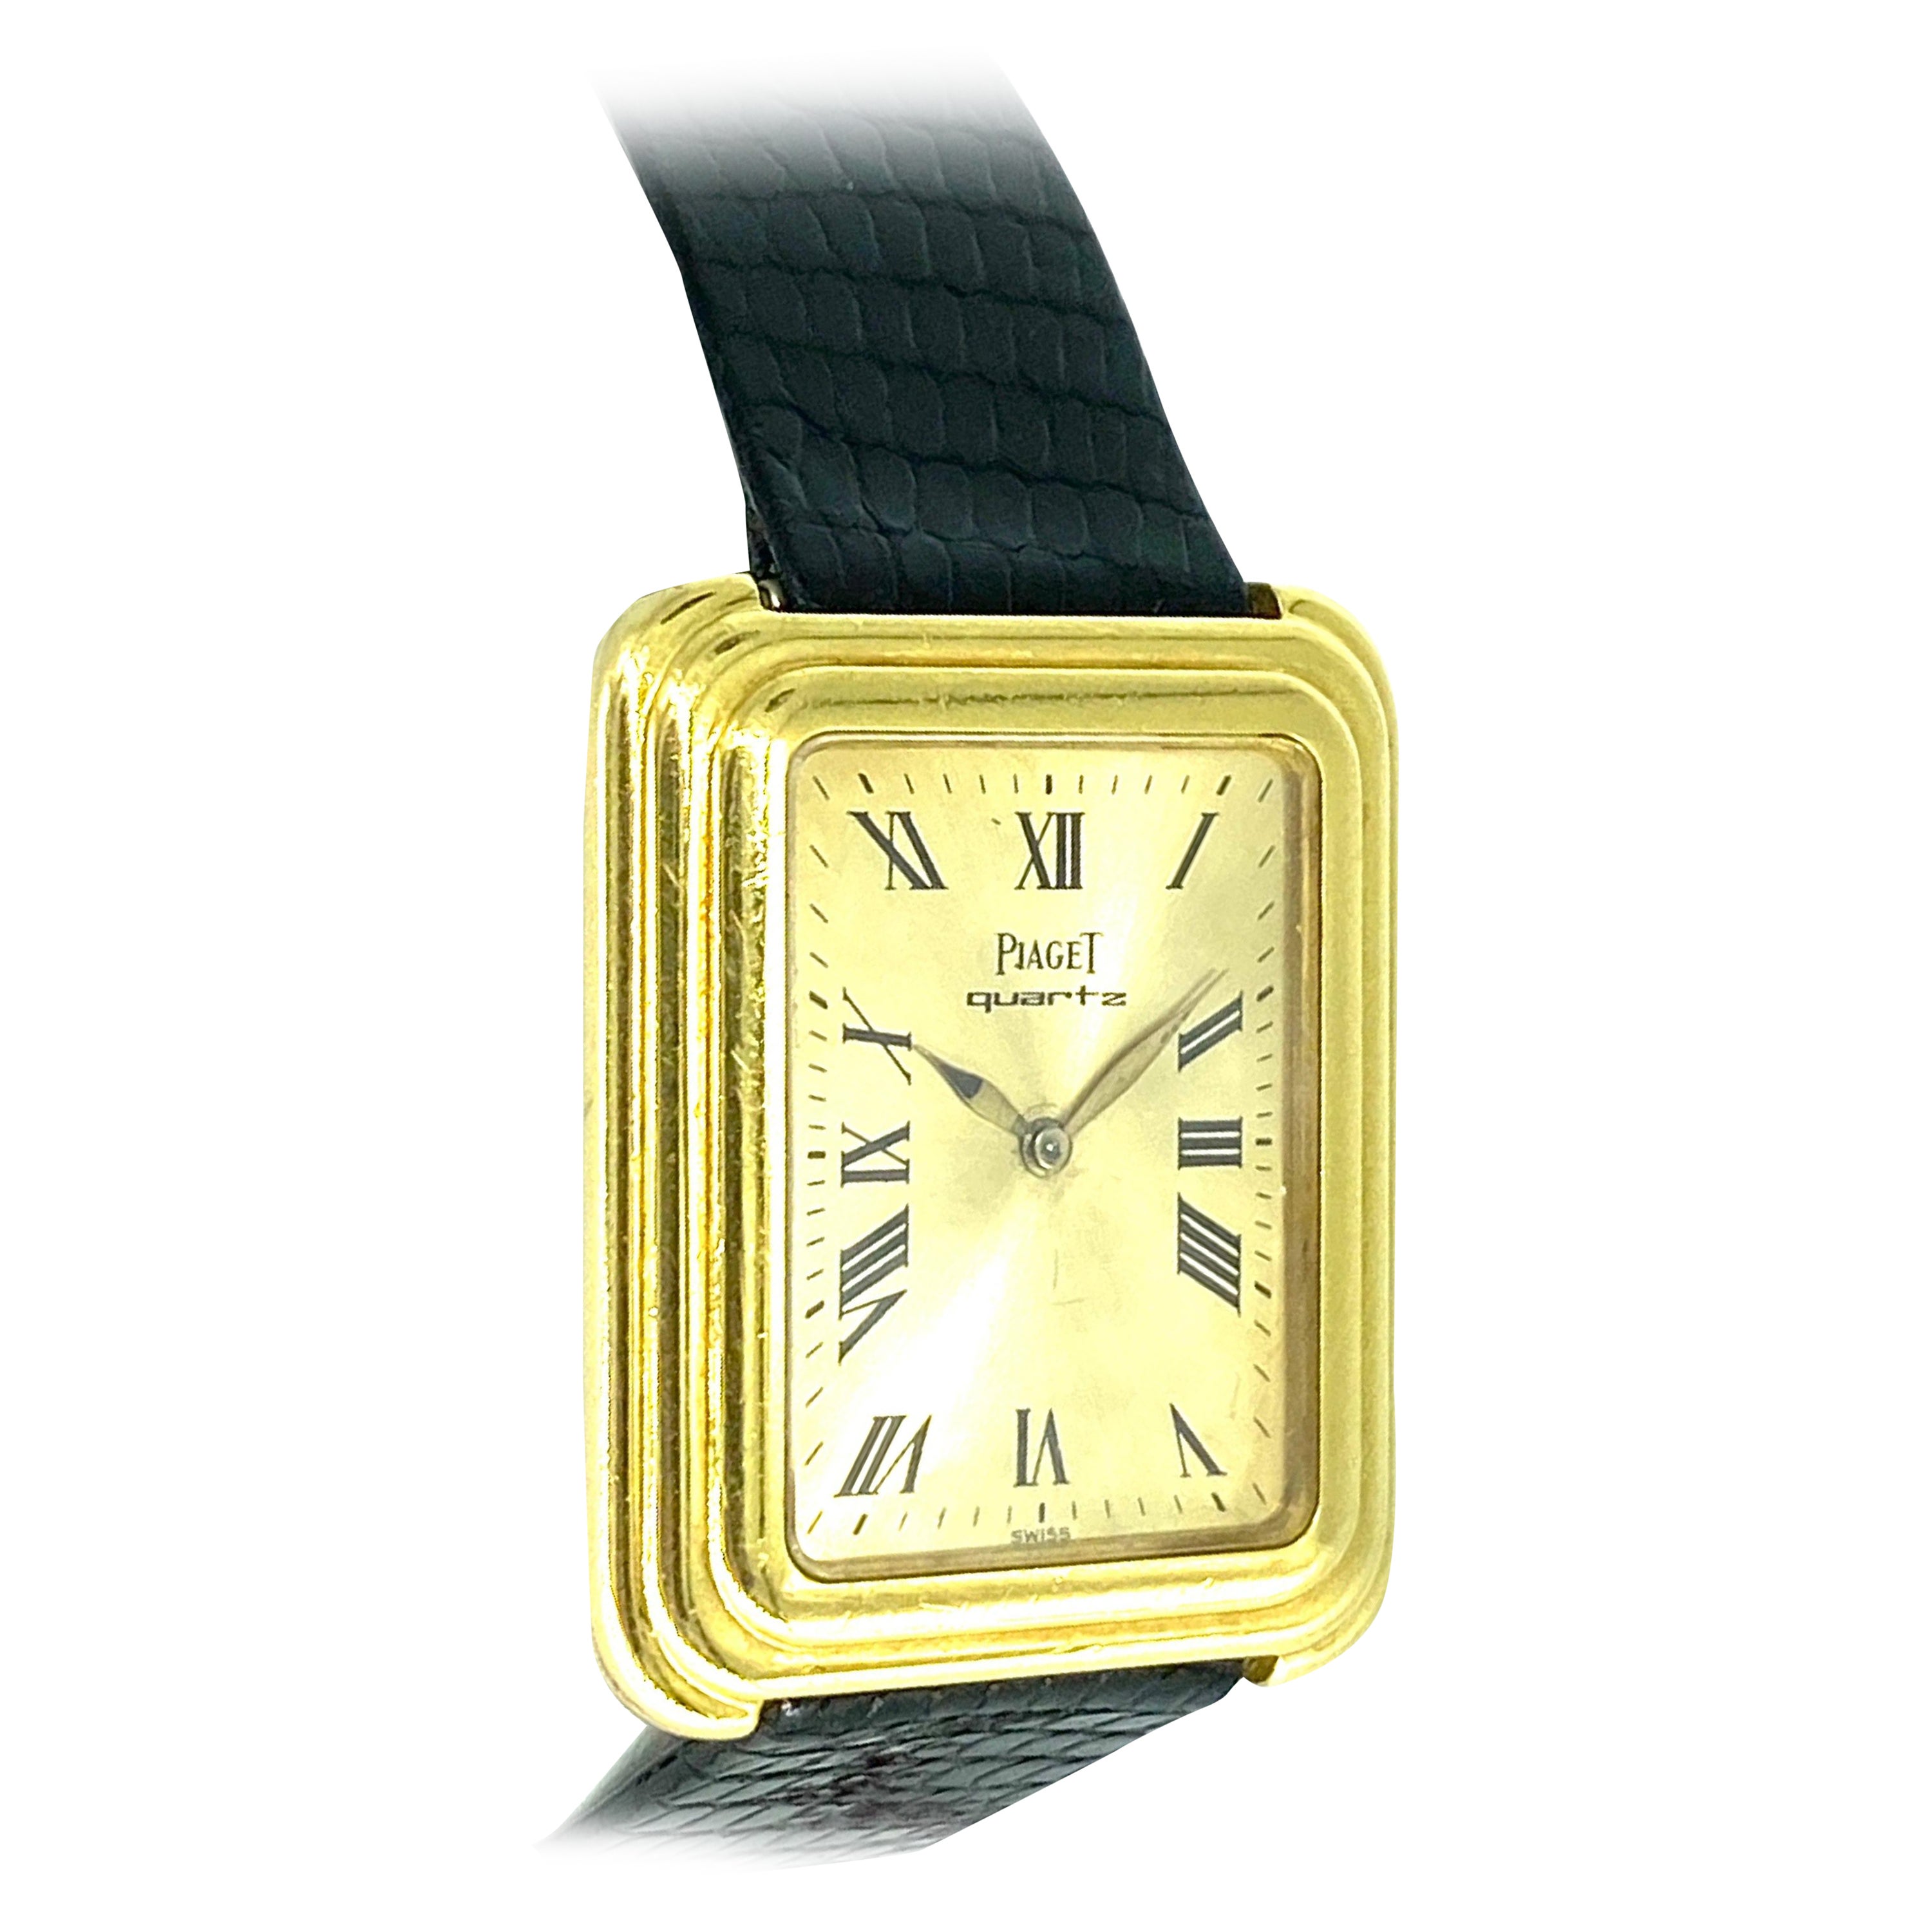 Piaget: 18 Karat massives Gold Uhrengehäuse mit Stempel, um 1980